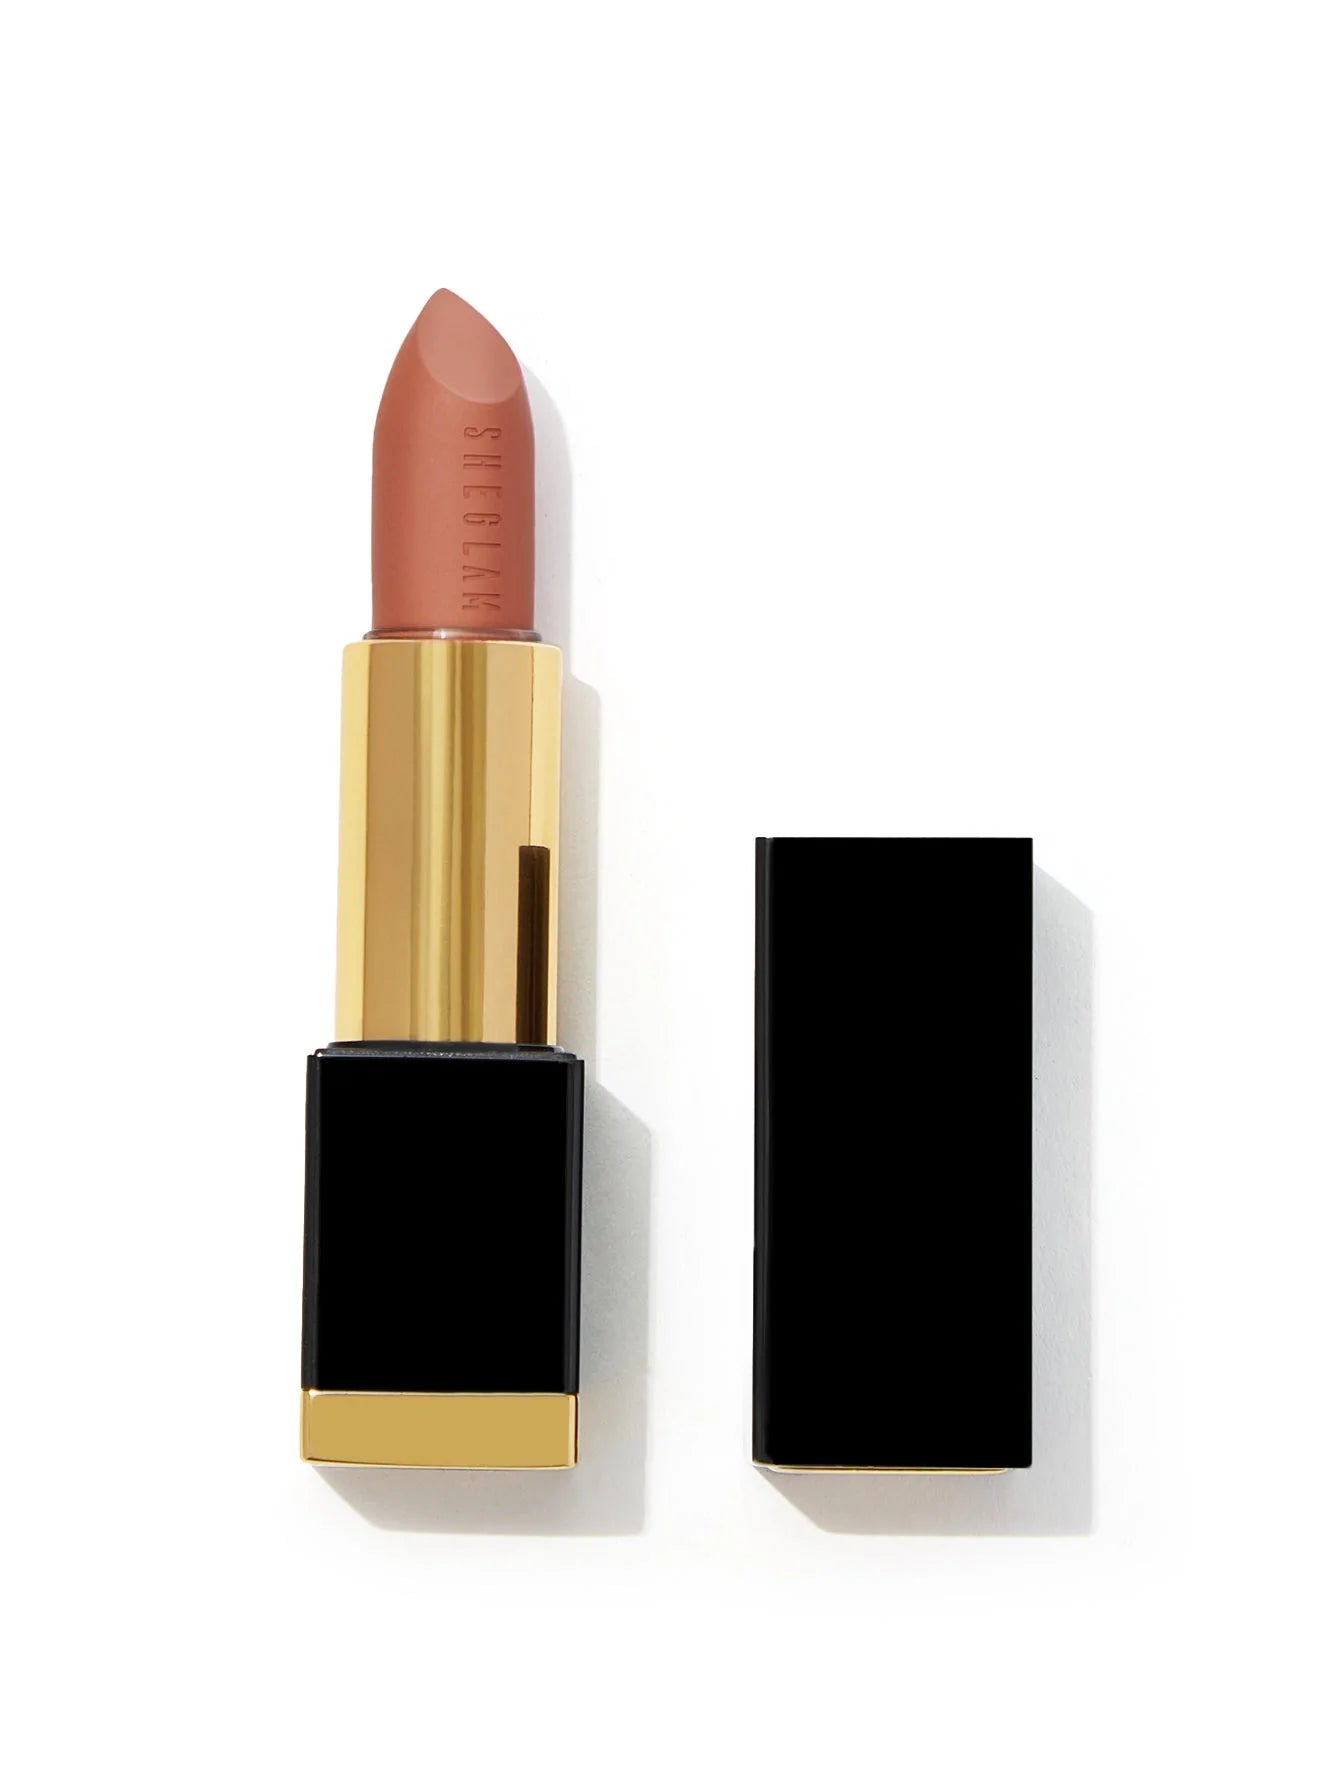 Chanel Gift Set (2 Perfume + 4 Lipstick Intense Lip Color) 100Gm